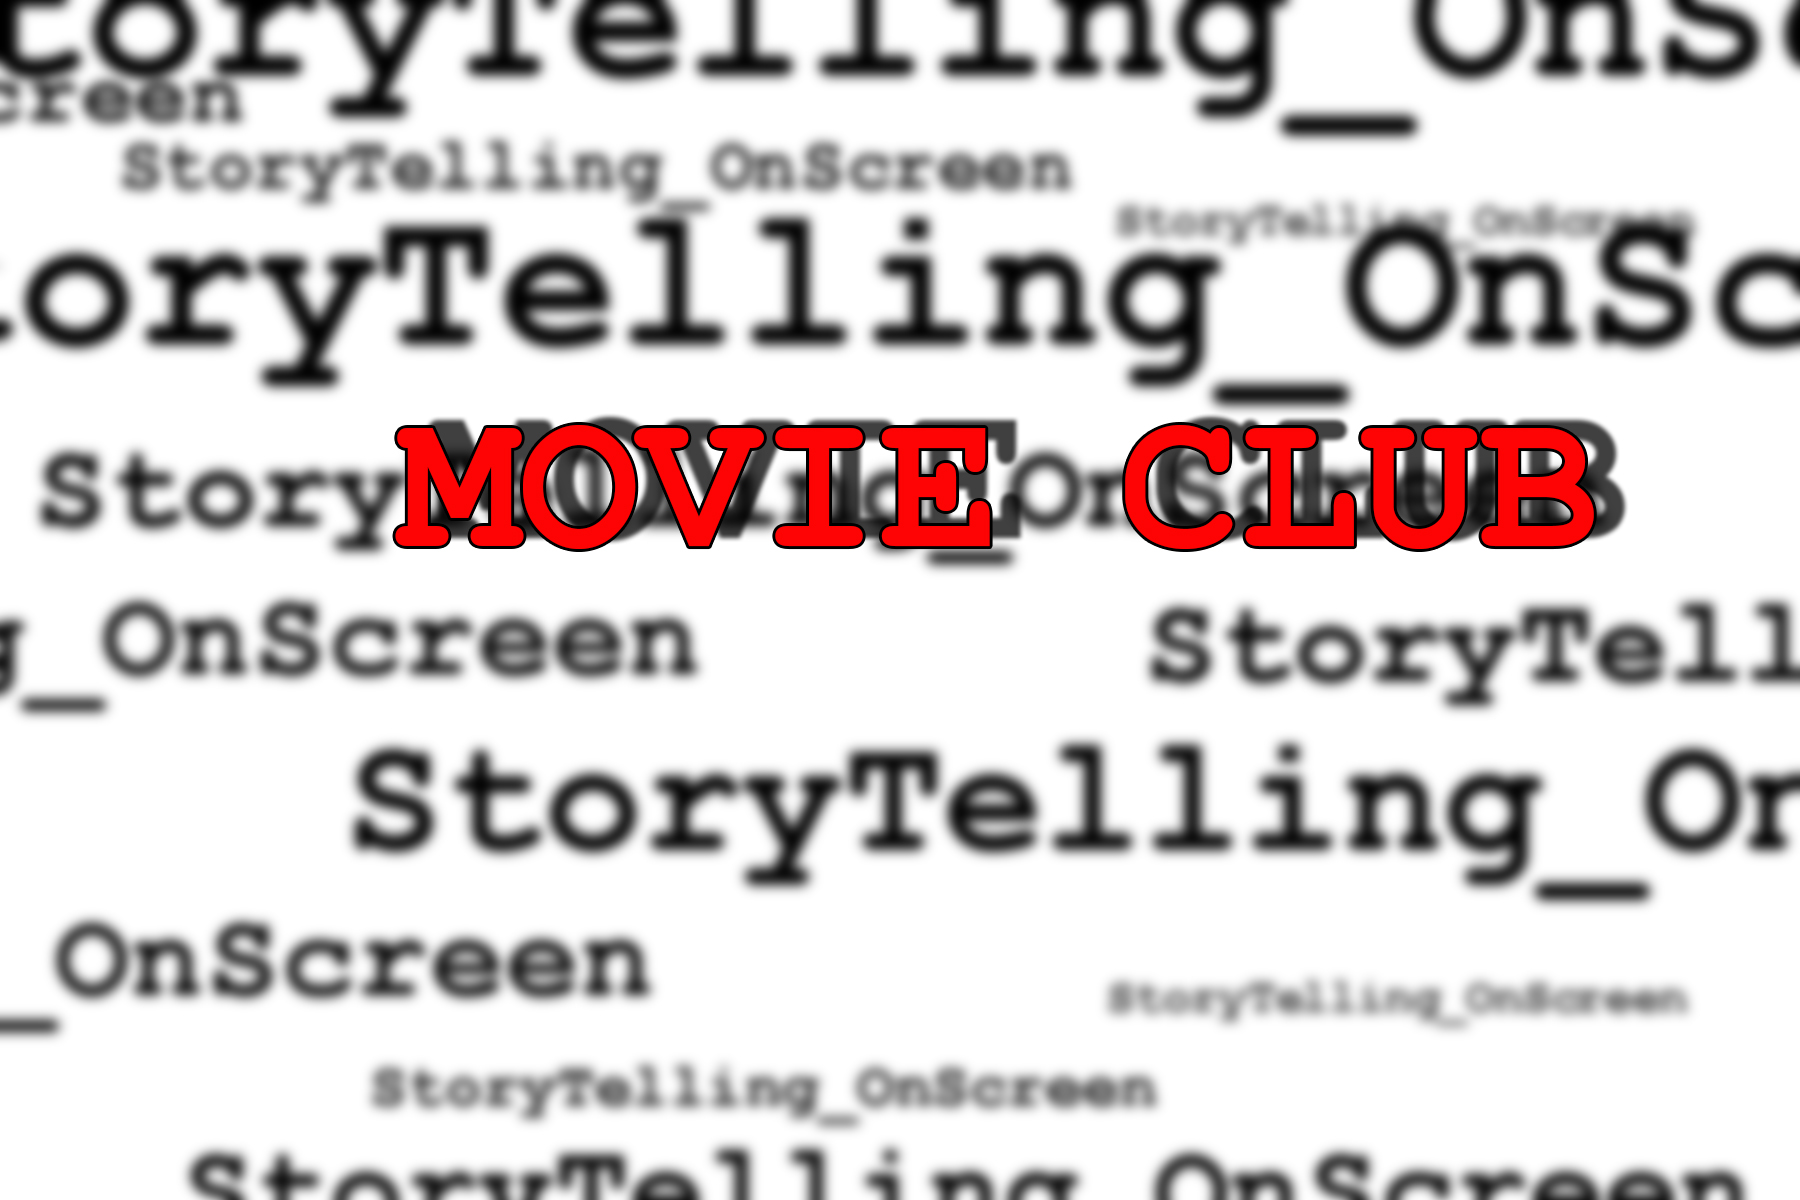 StoryTelling_OnScreen
Movie Club